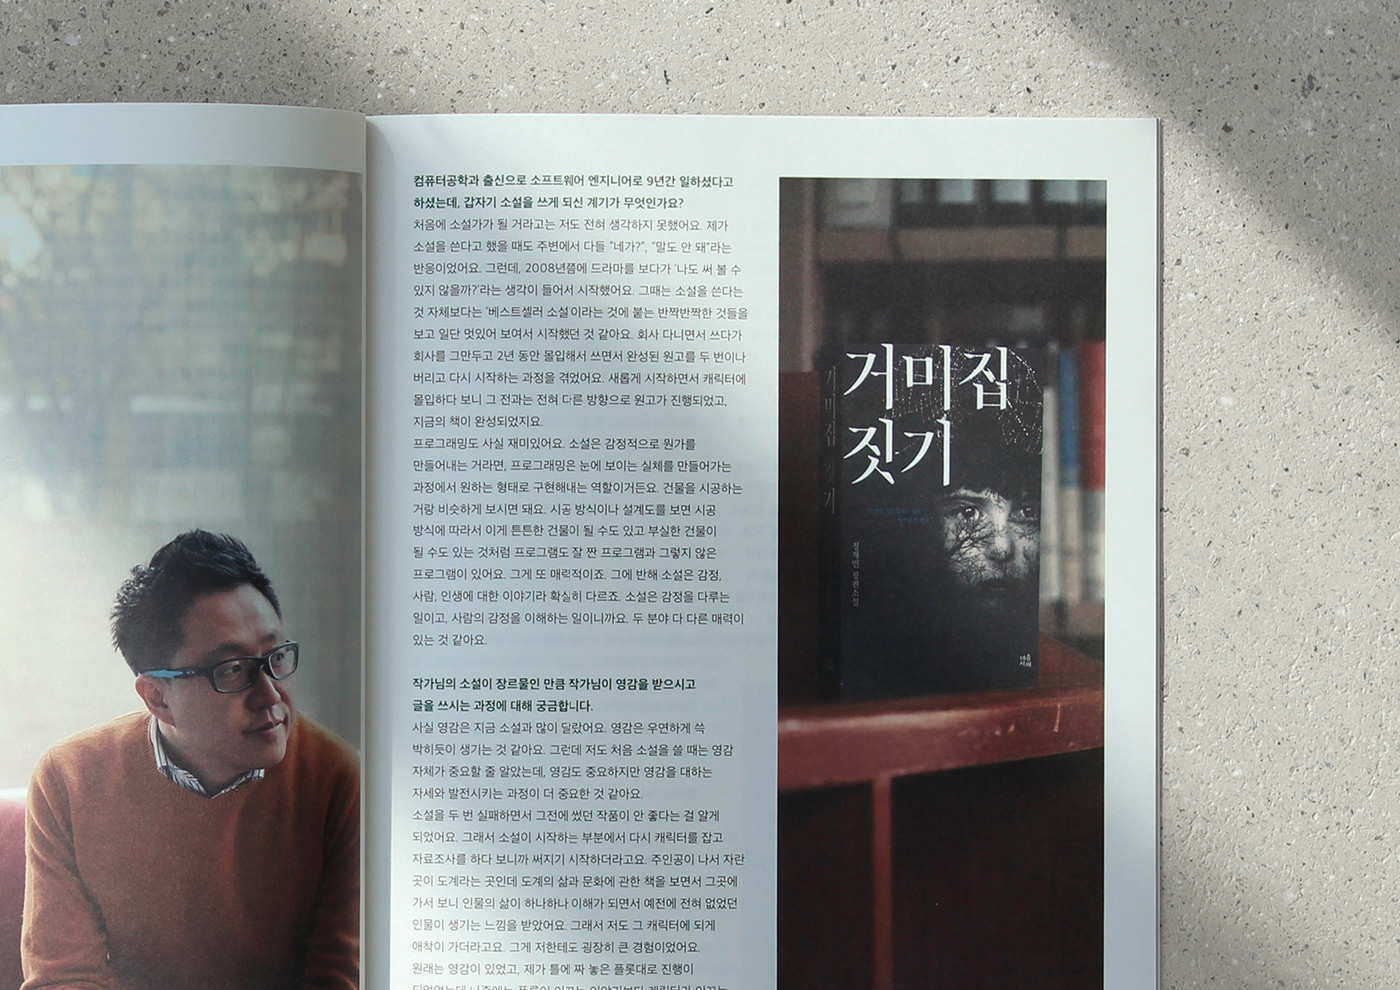 soganguniversity magazine oneissue editorial book Anthology 서강대학교 Loyola library bookreport